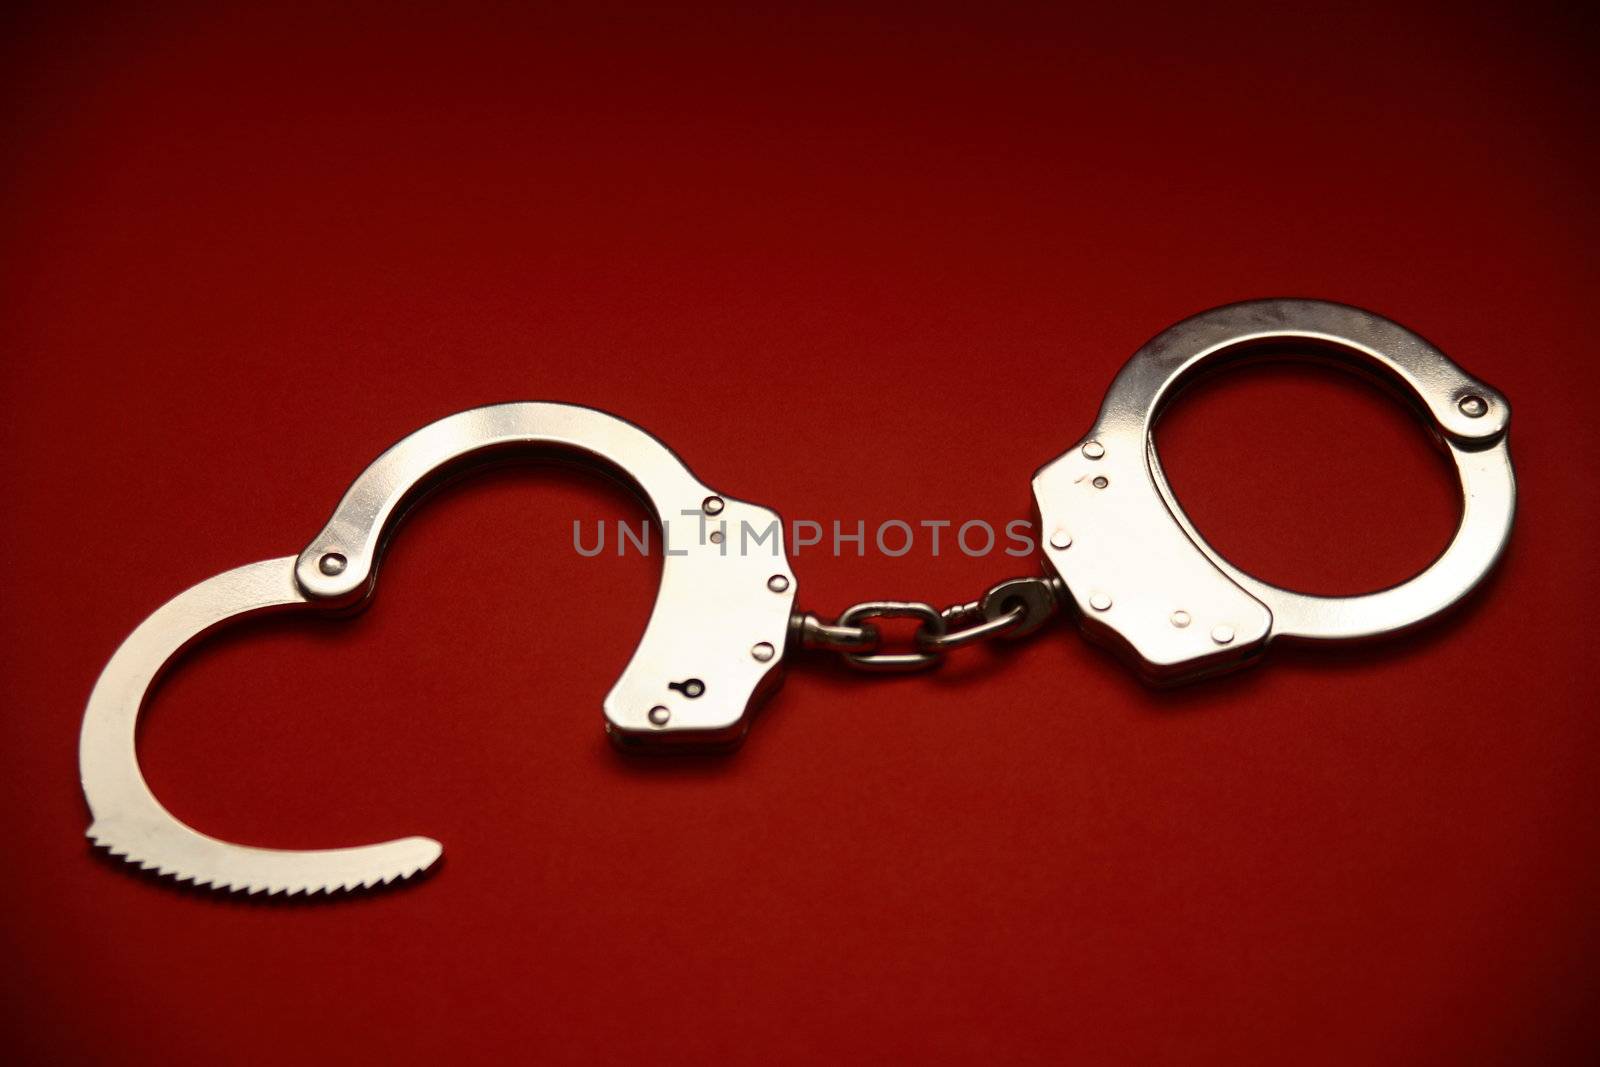 A pair of open handcuffs.